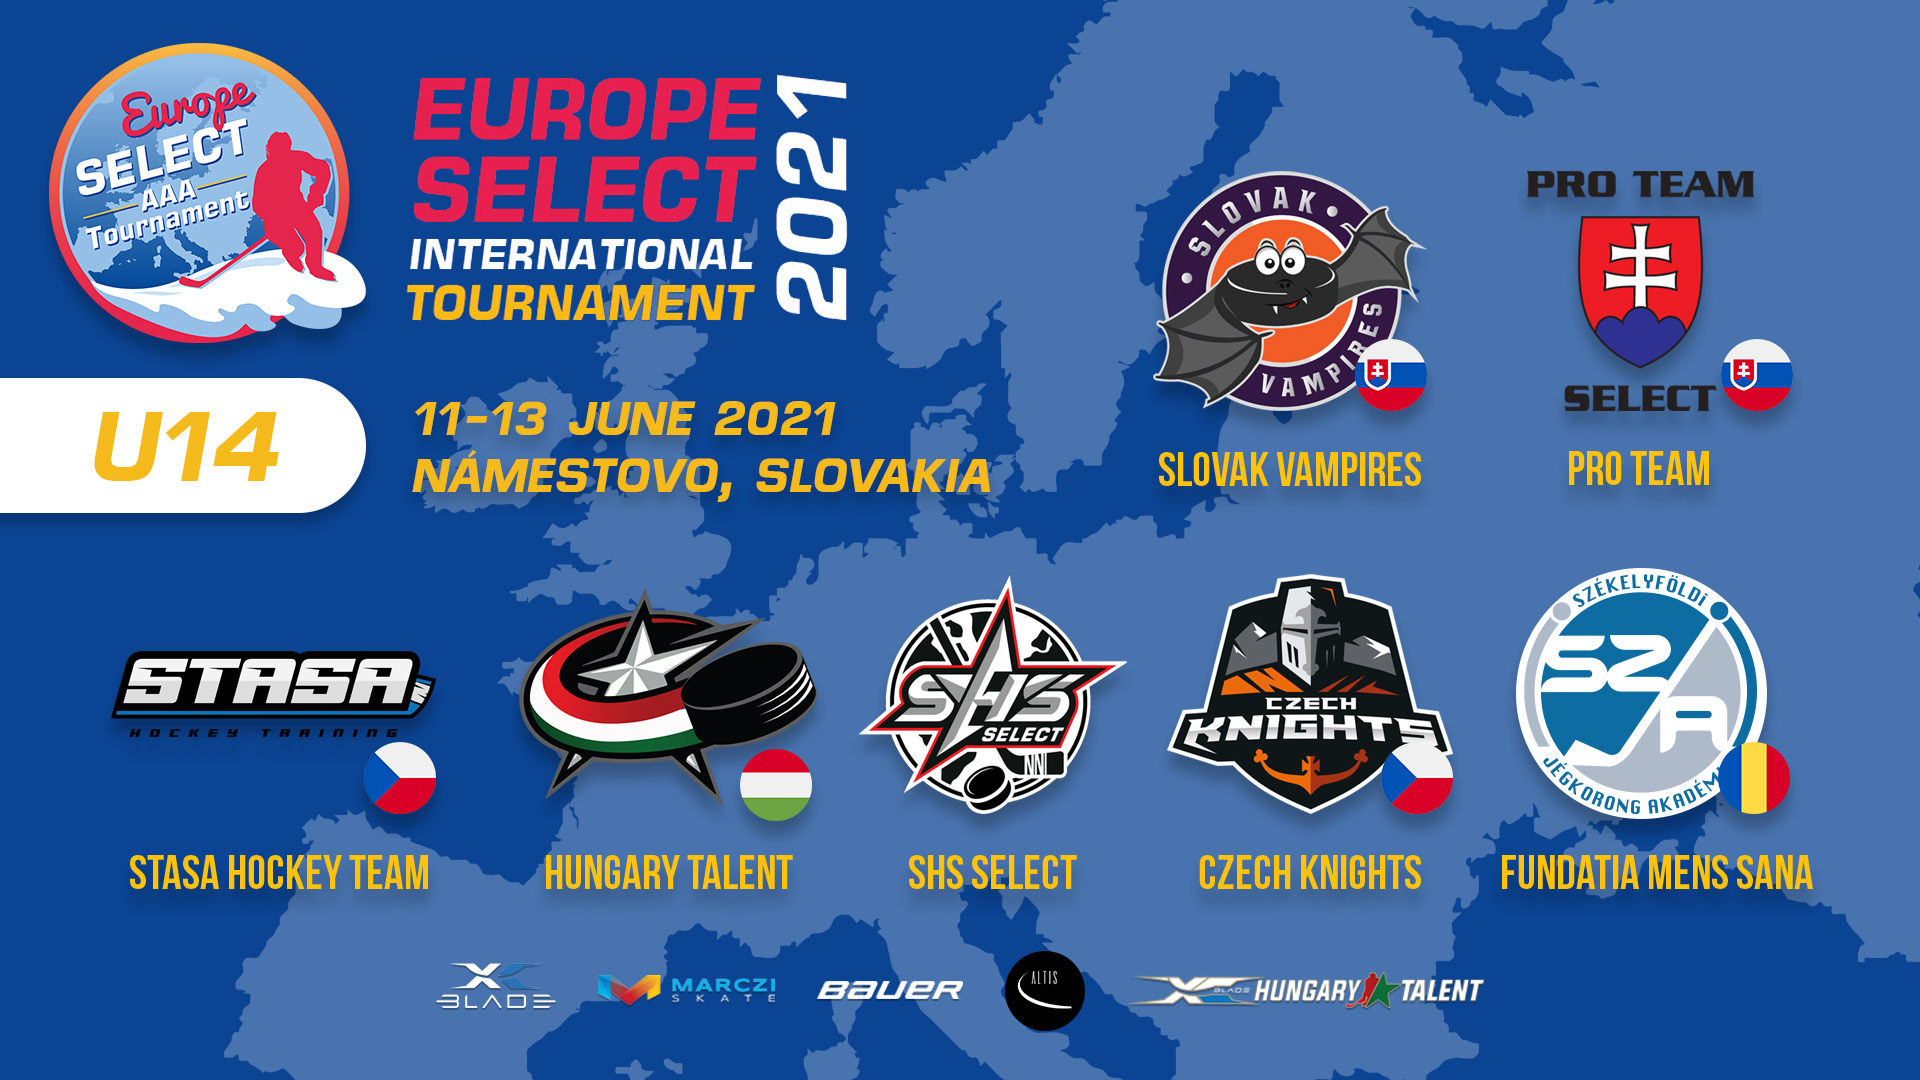 Júnový Europe Summer Tournament U14!